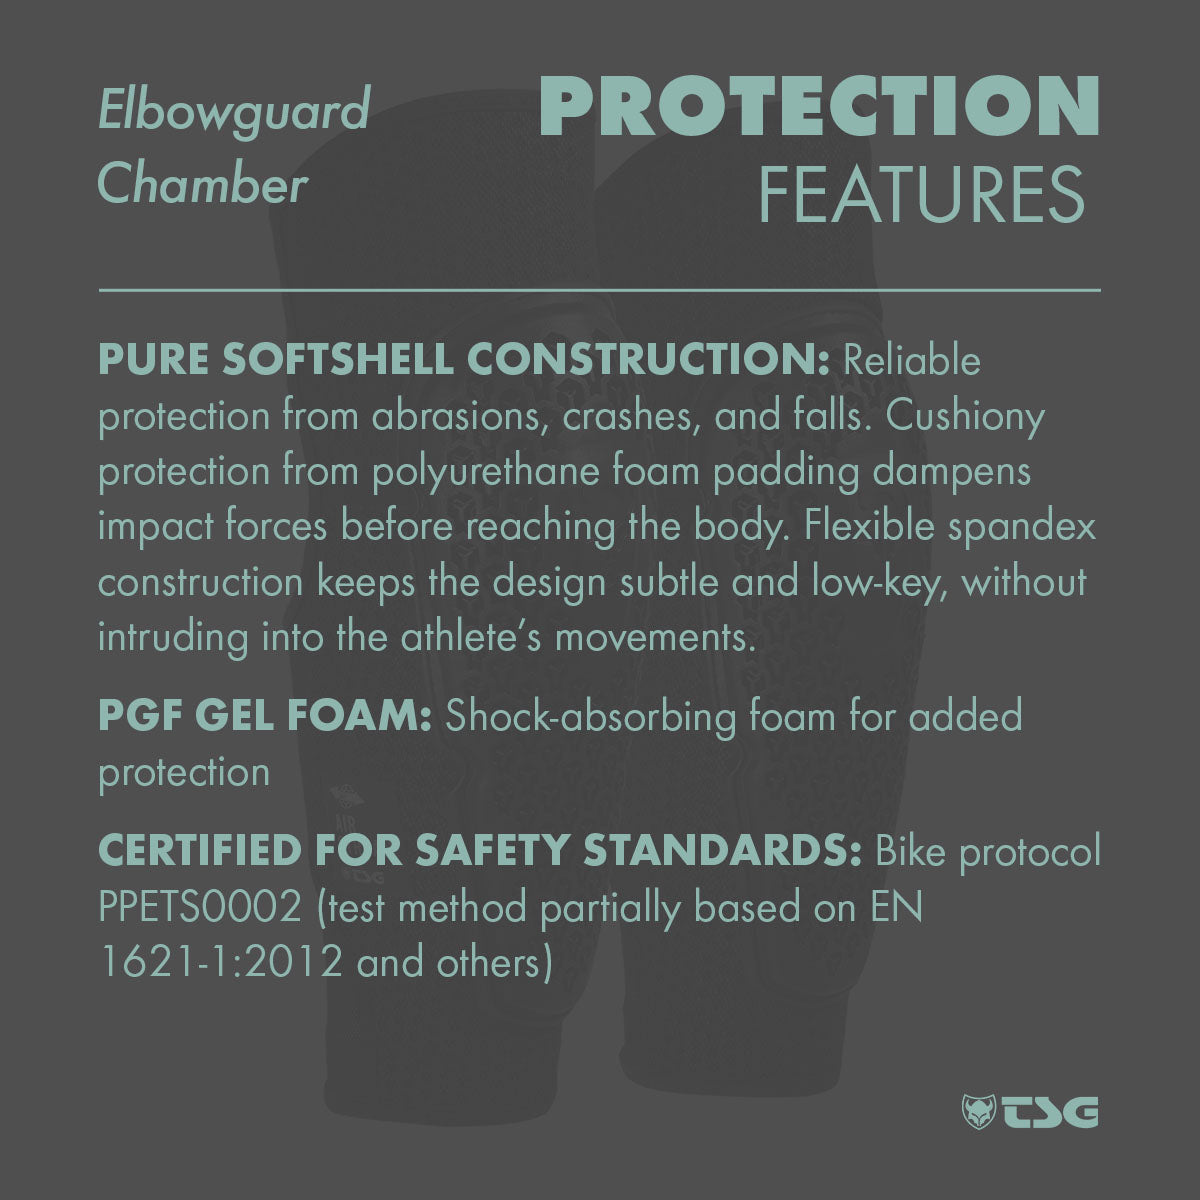 TSG - Elbowguard Chamber